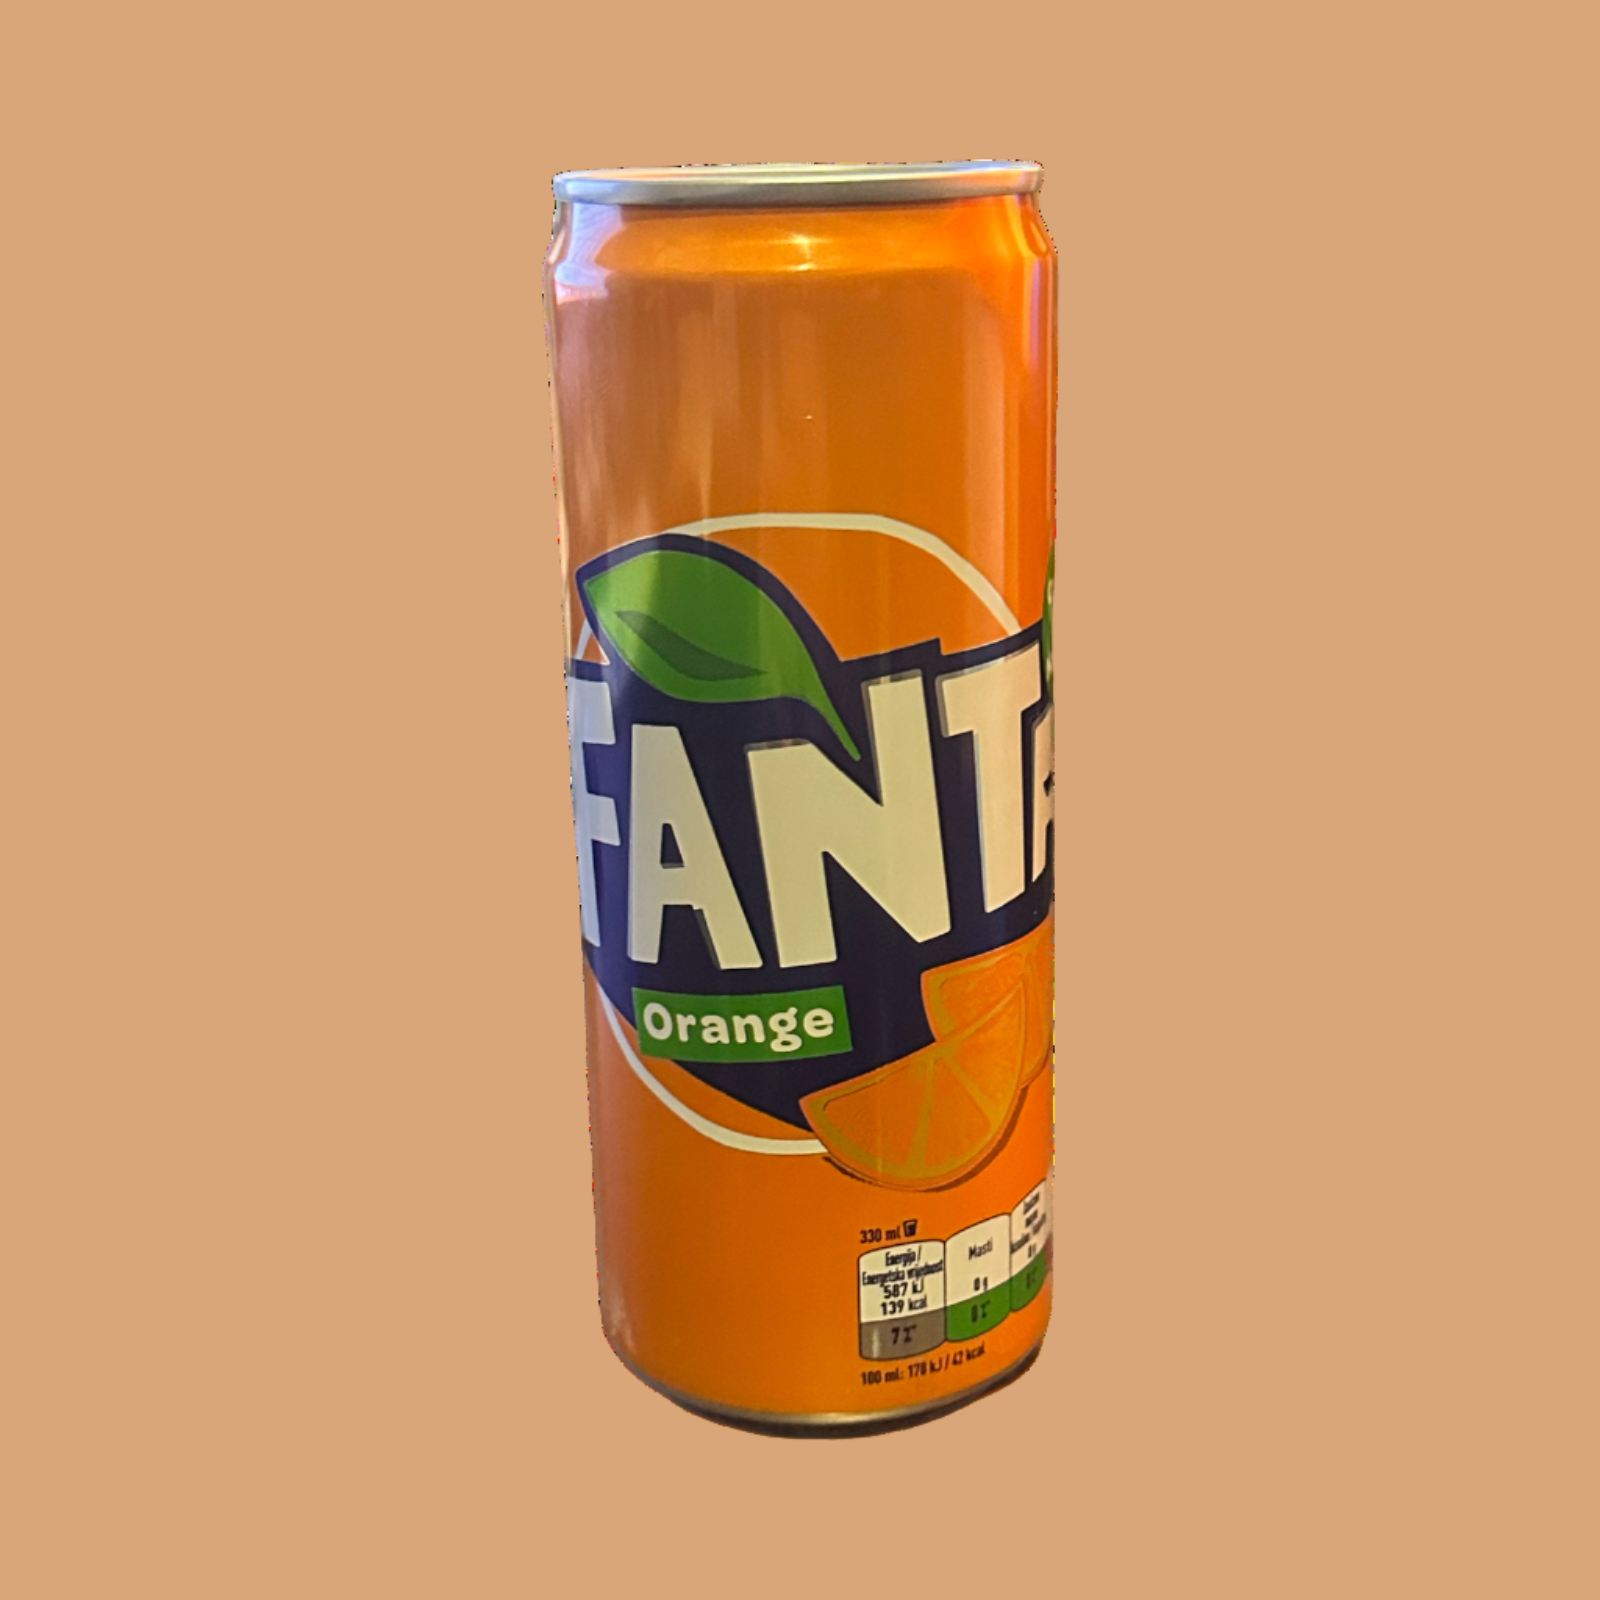 Fanta - Orange 330mL (Serbia)